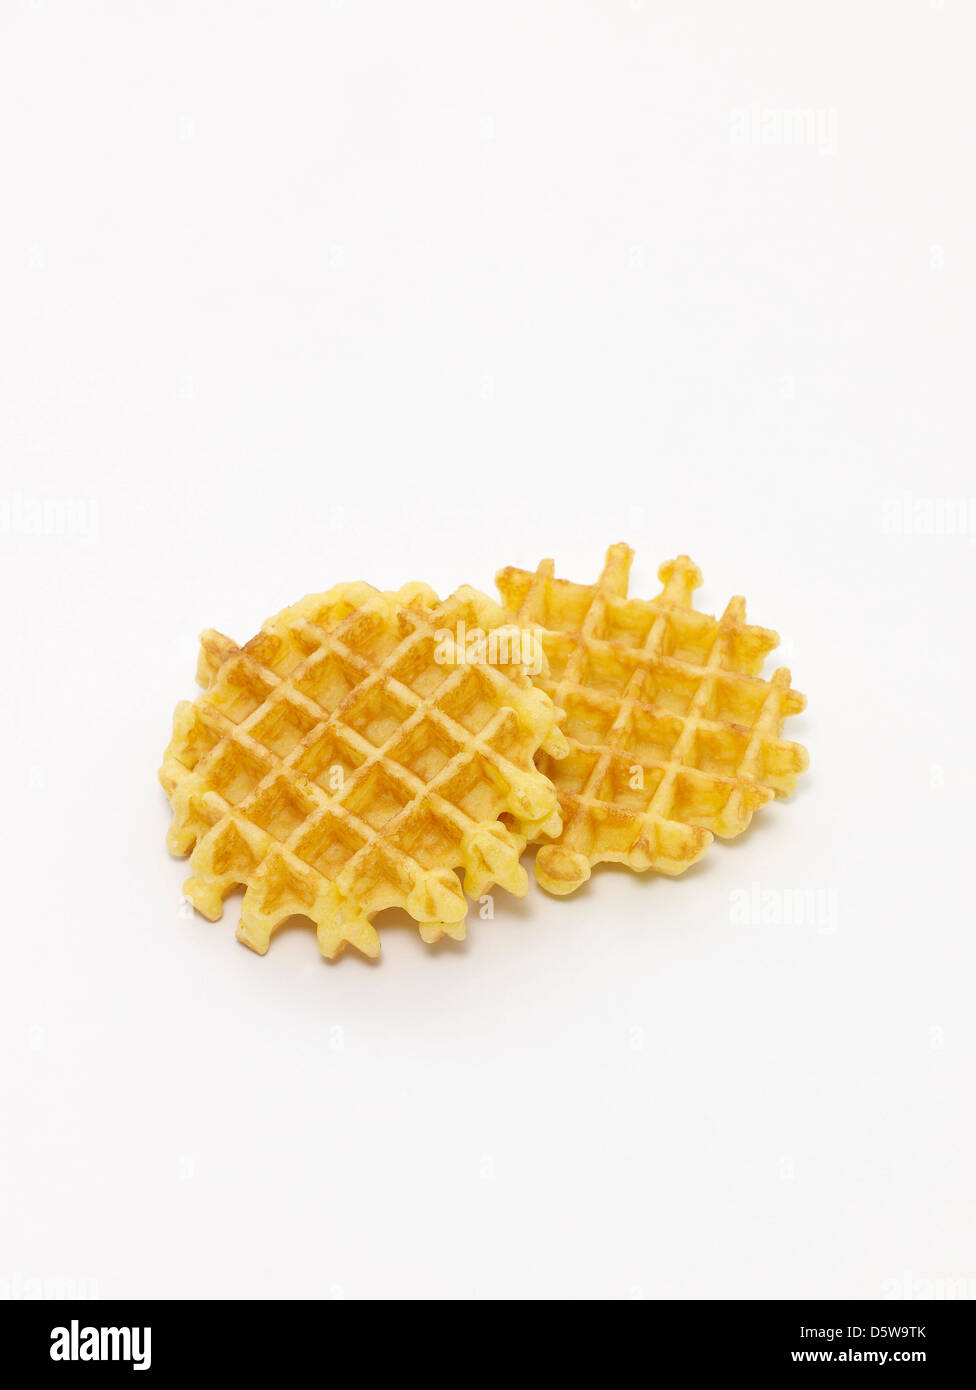 Belgium Waffles on a White background Stock Photo